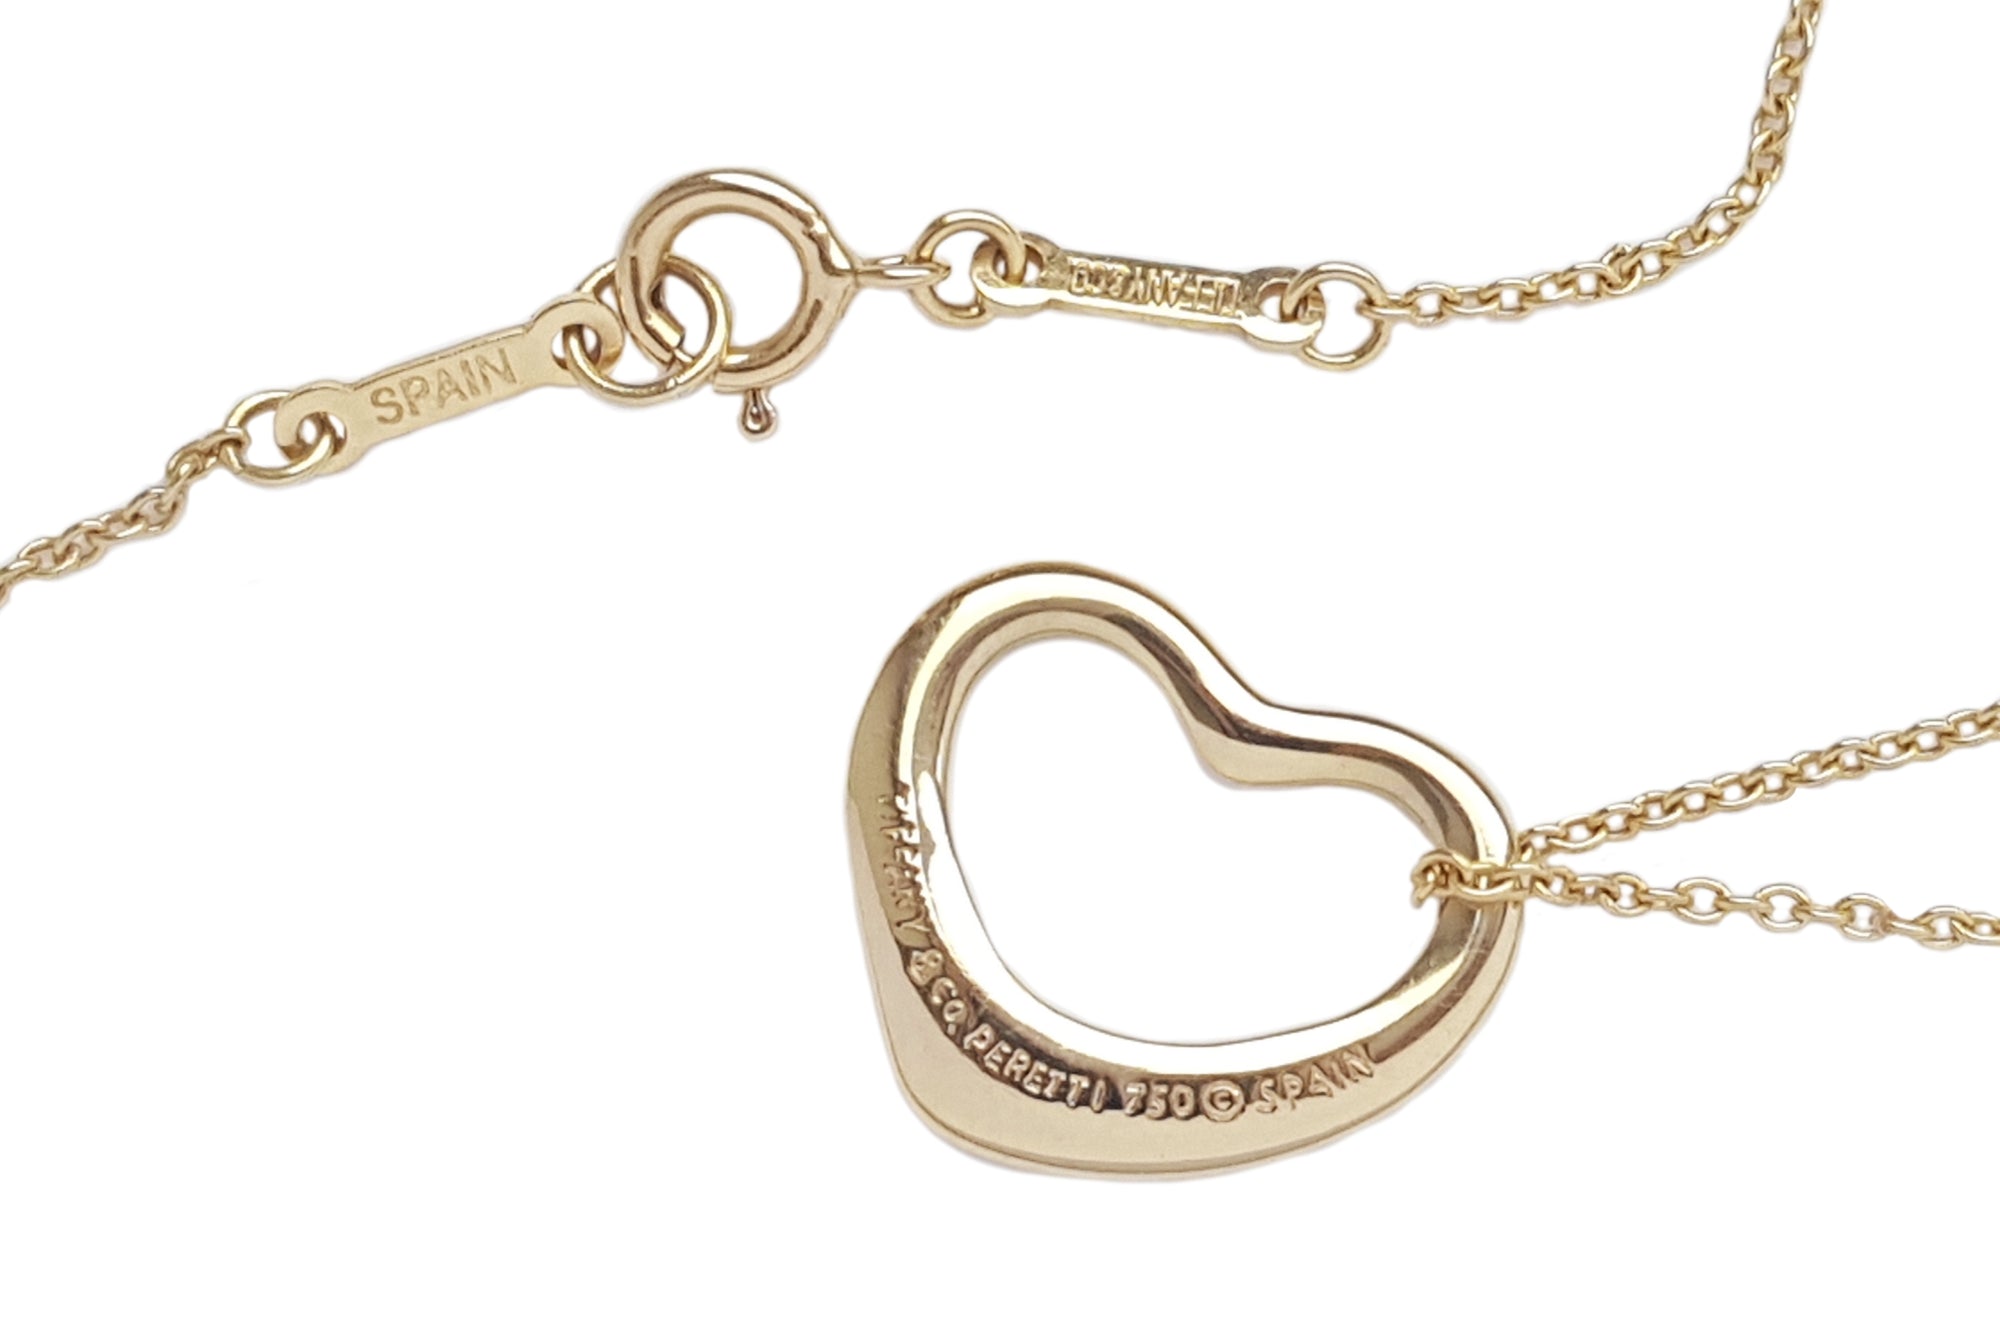 Tiffany & Co 16mm 750 (Gold) Elsa Peretti Open Heart Necklace 16"